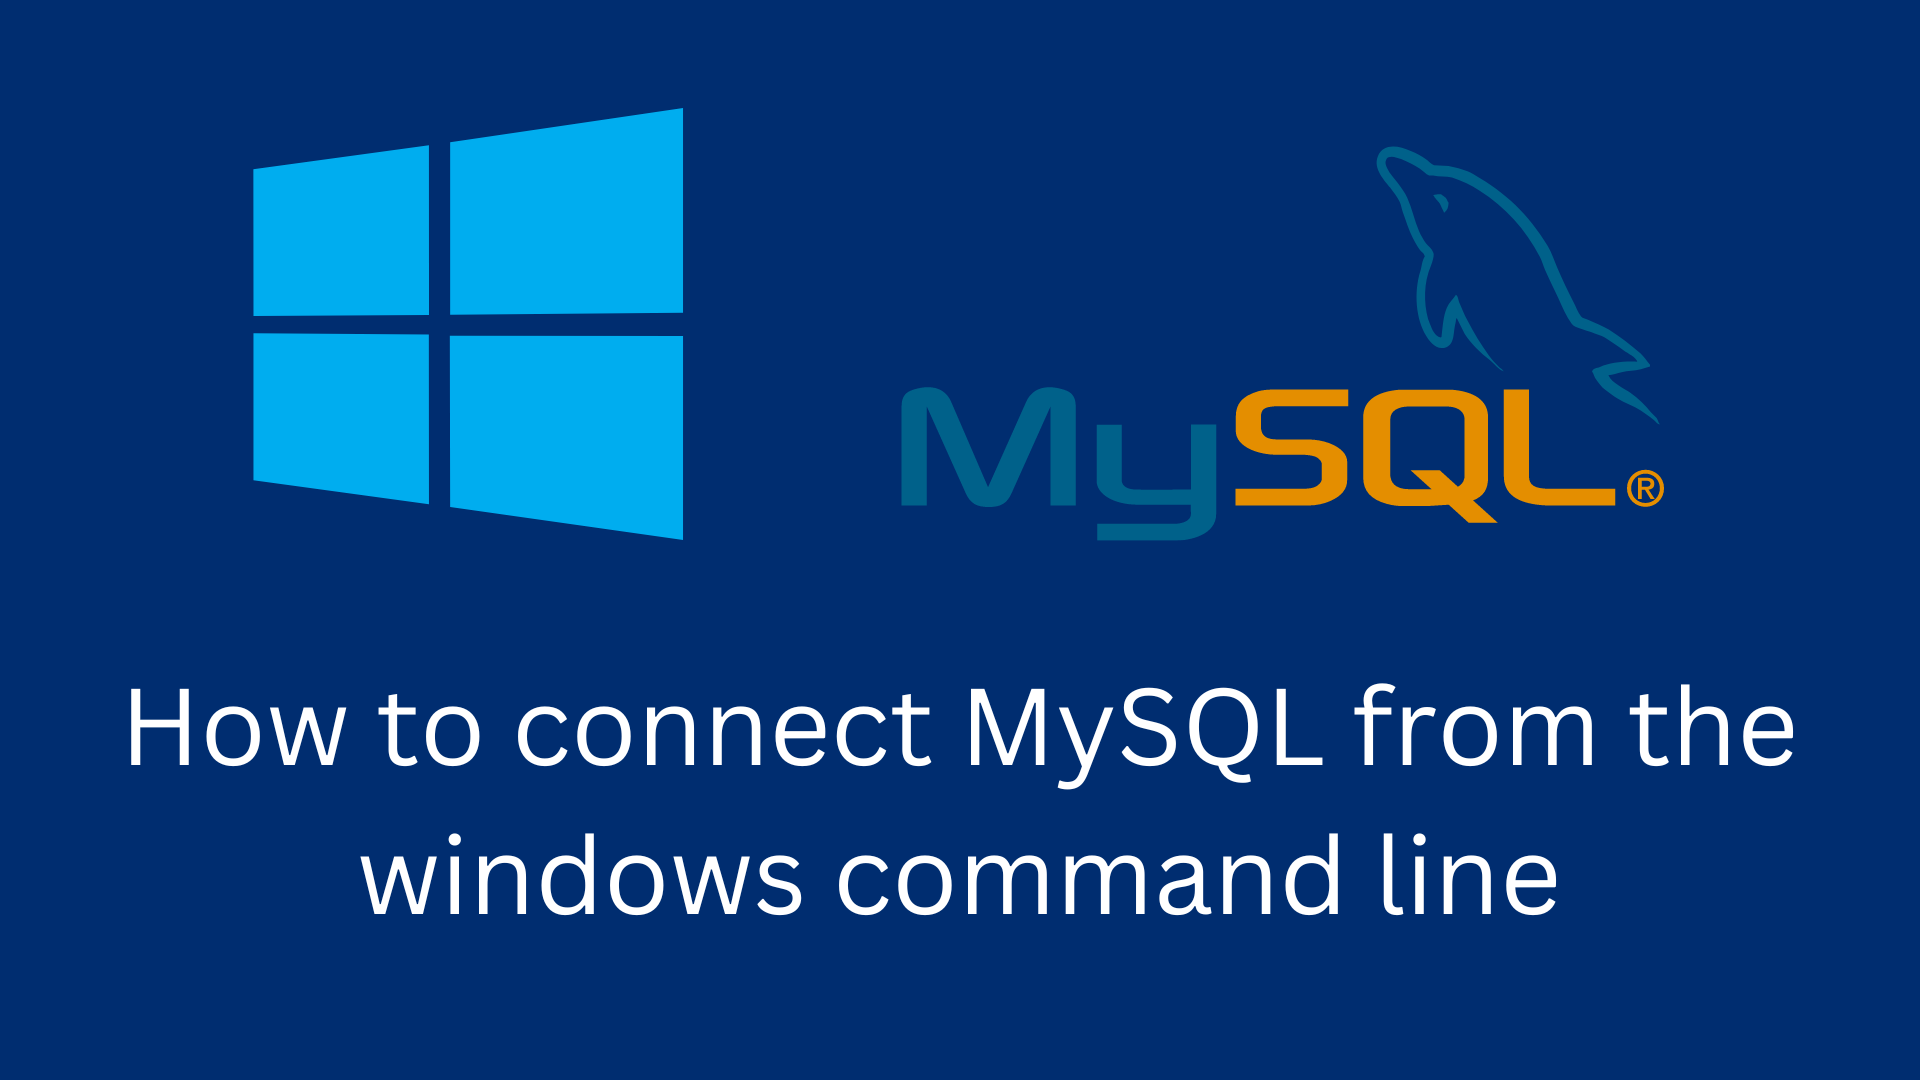 Download mysql command line tool windows 10